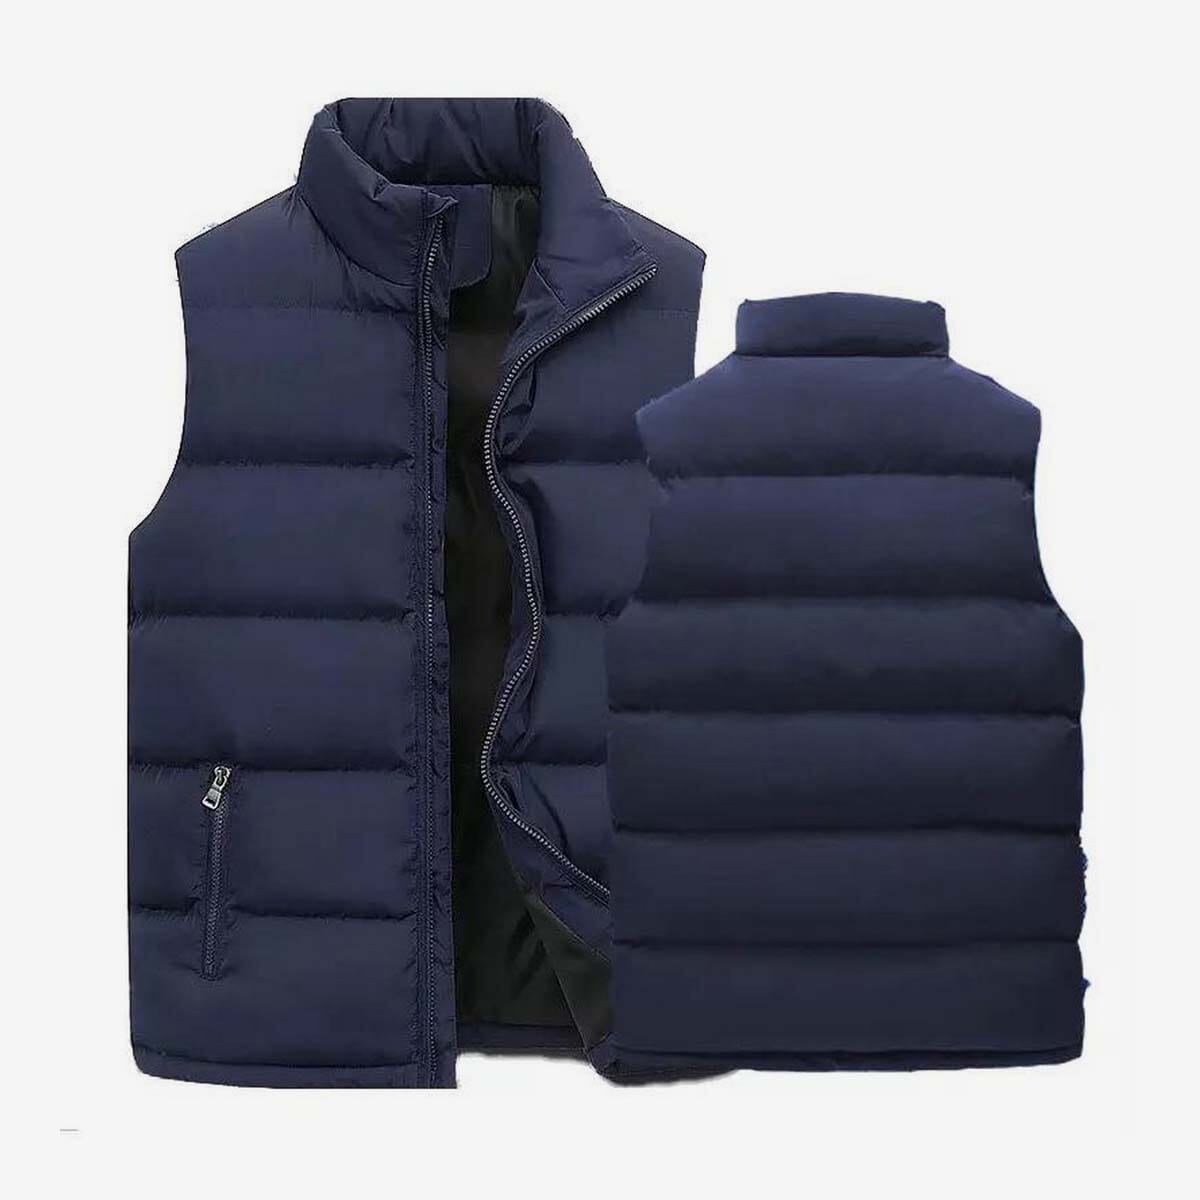 Men's Winter Sleeveless Holofill Half-Jacket - Fashion, Jackets For Men, Men's Wear, Winter Jackets